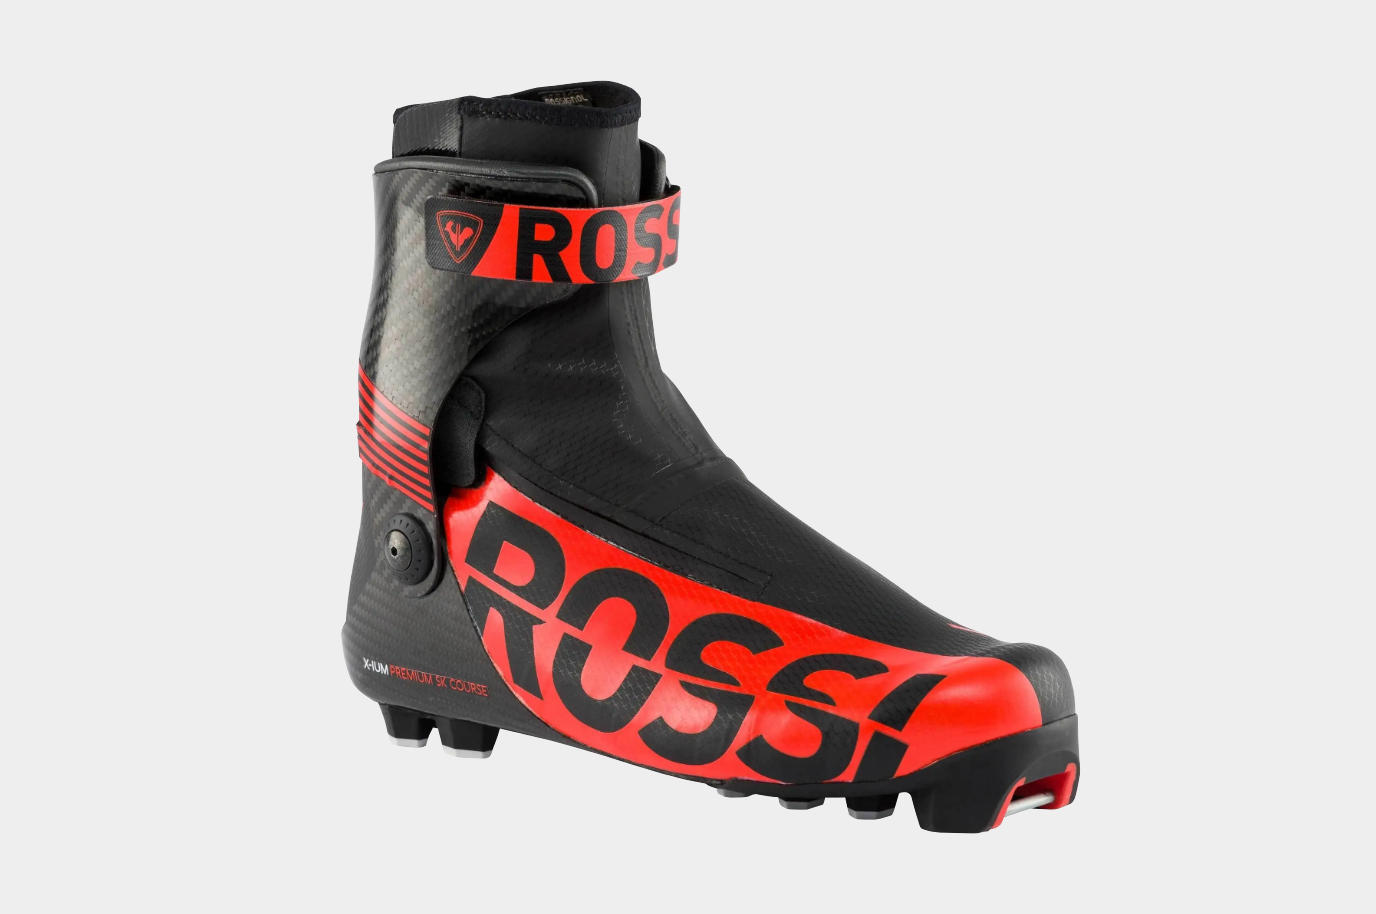 Ski boots image